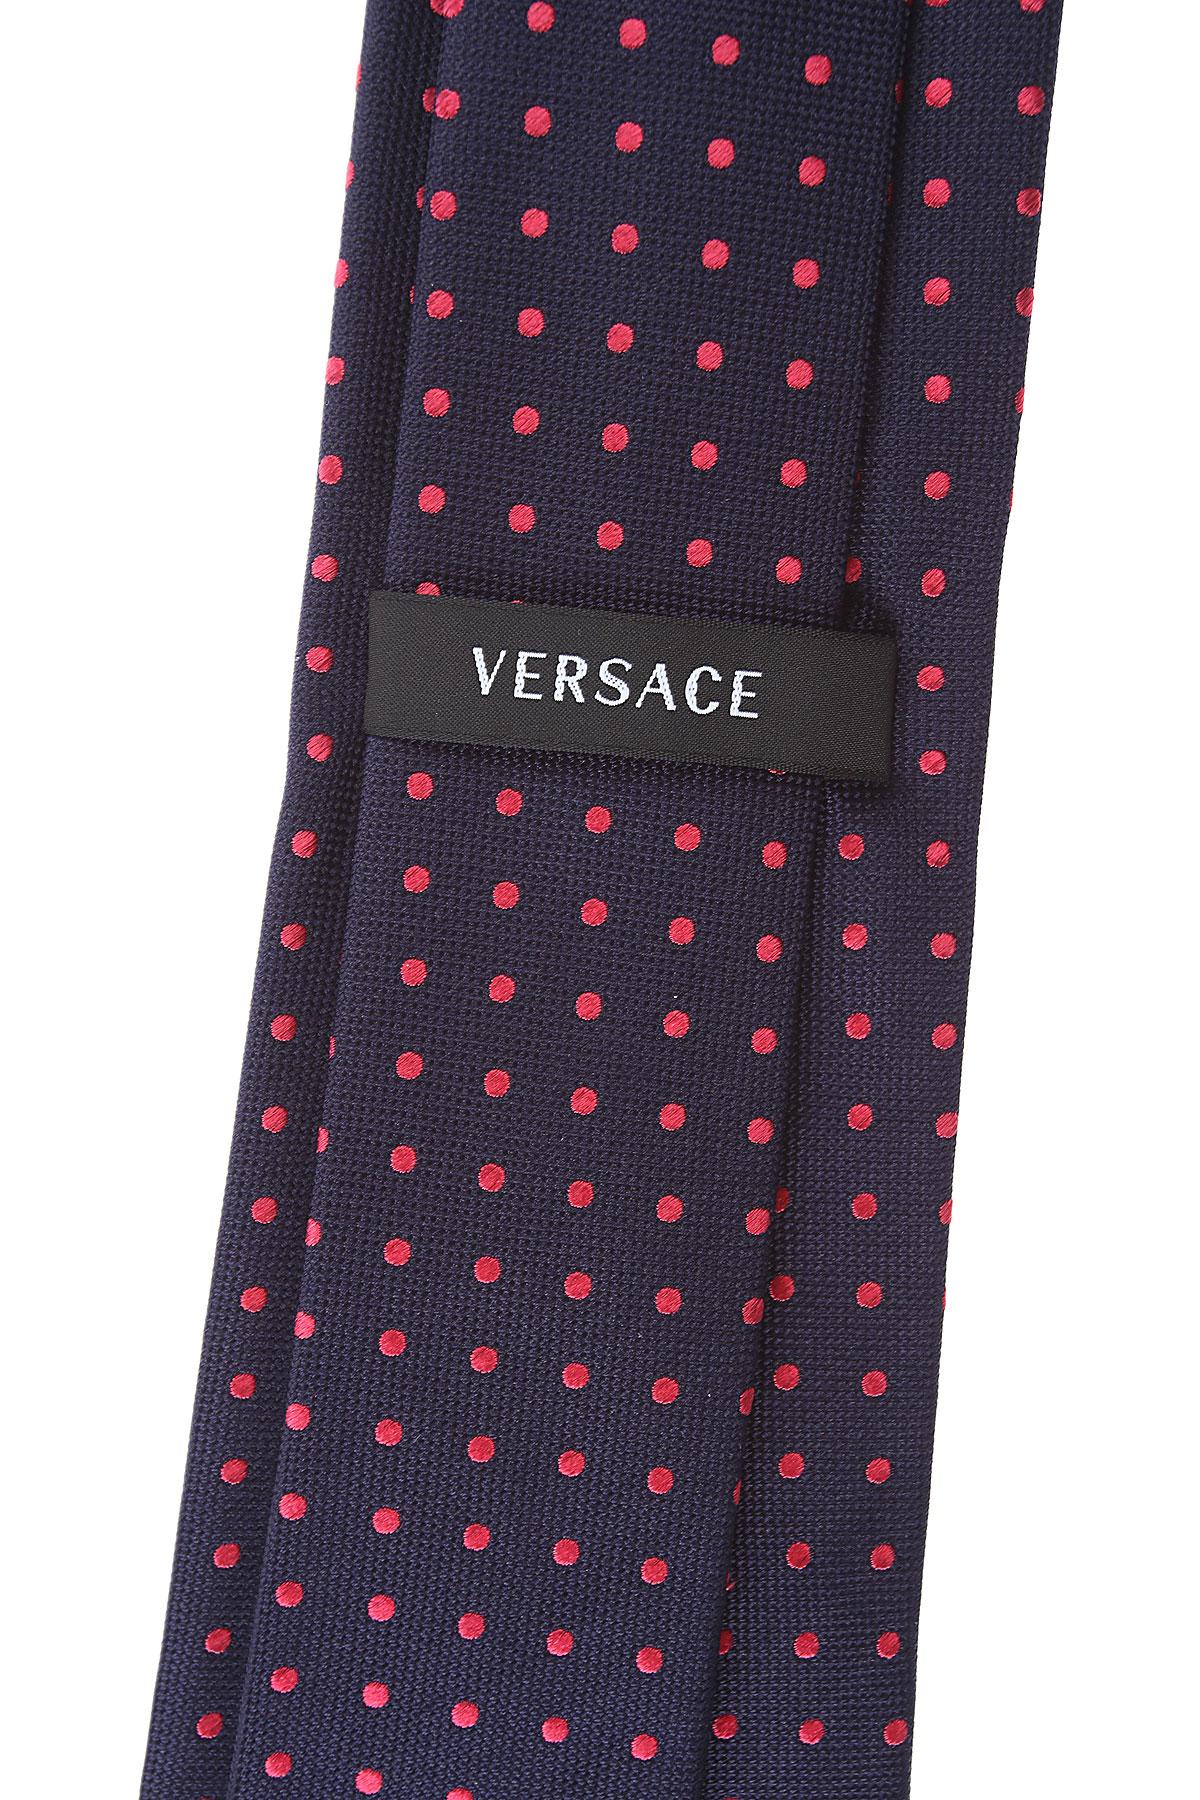 Versace Silk Ties On Sale in Blue for Men - Lyst